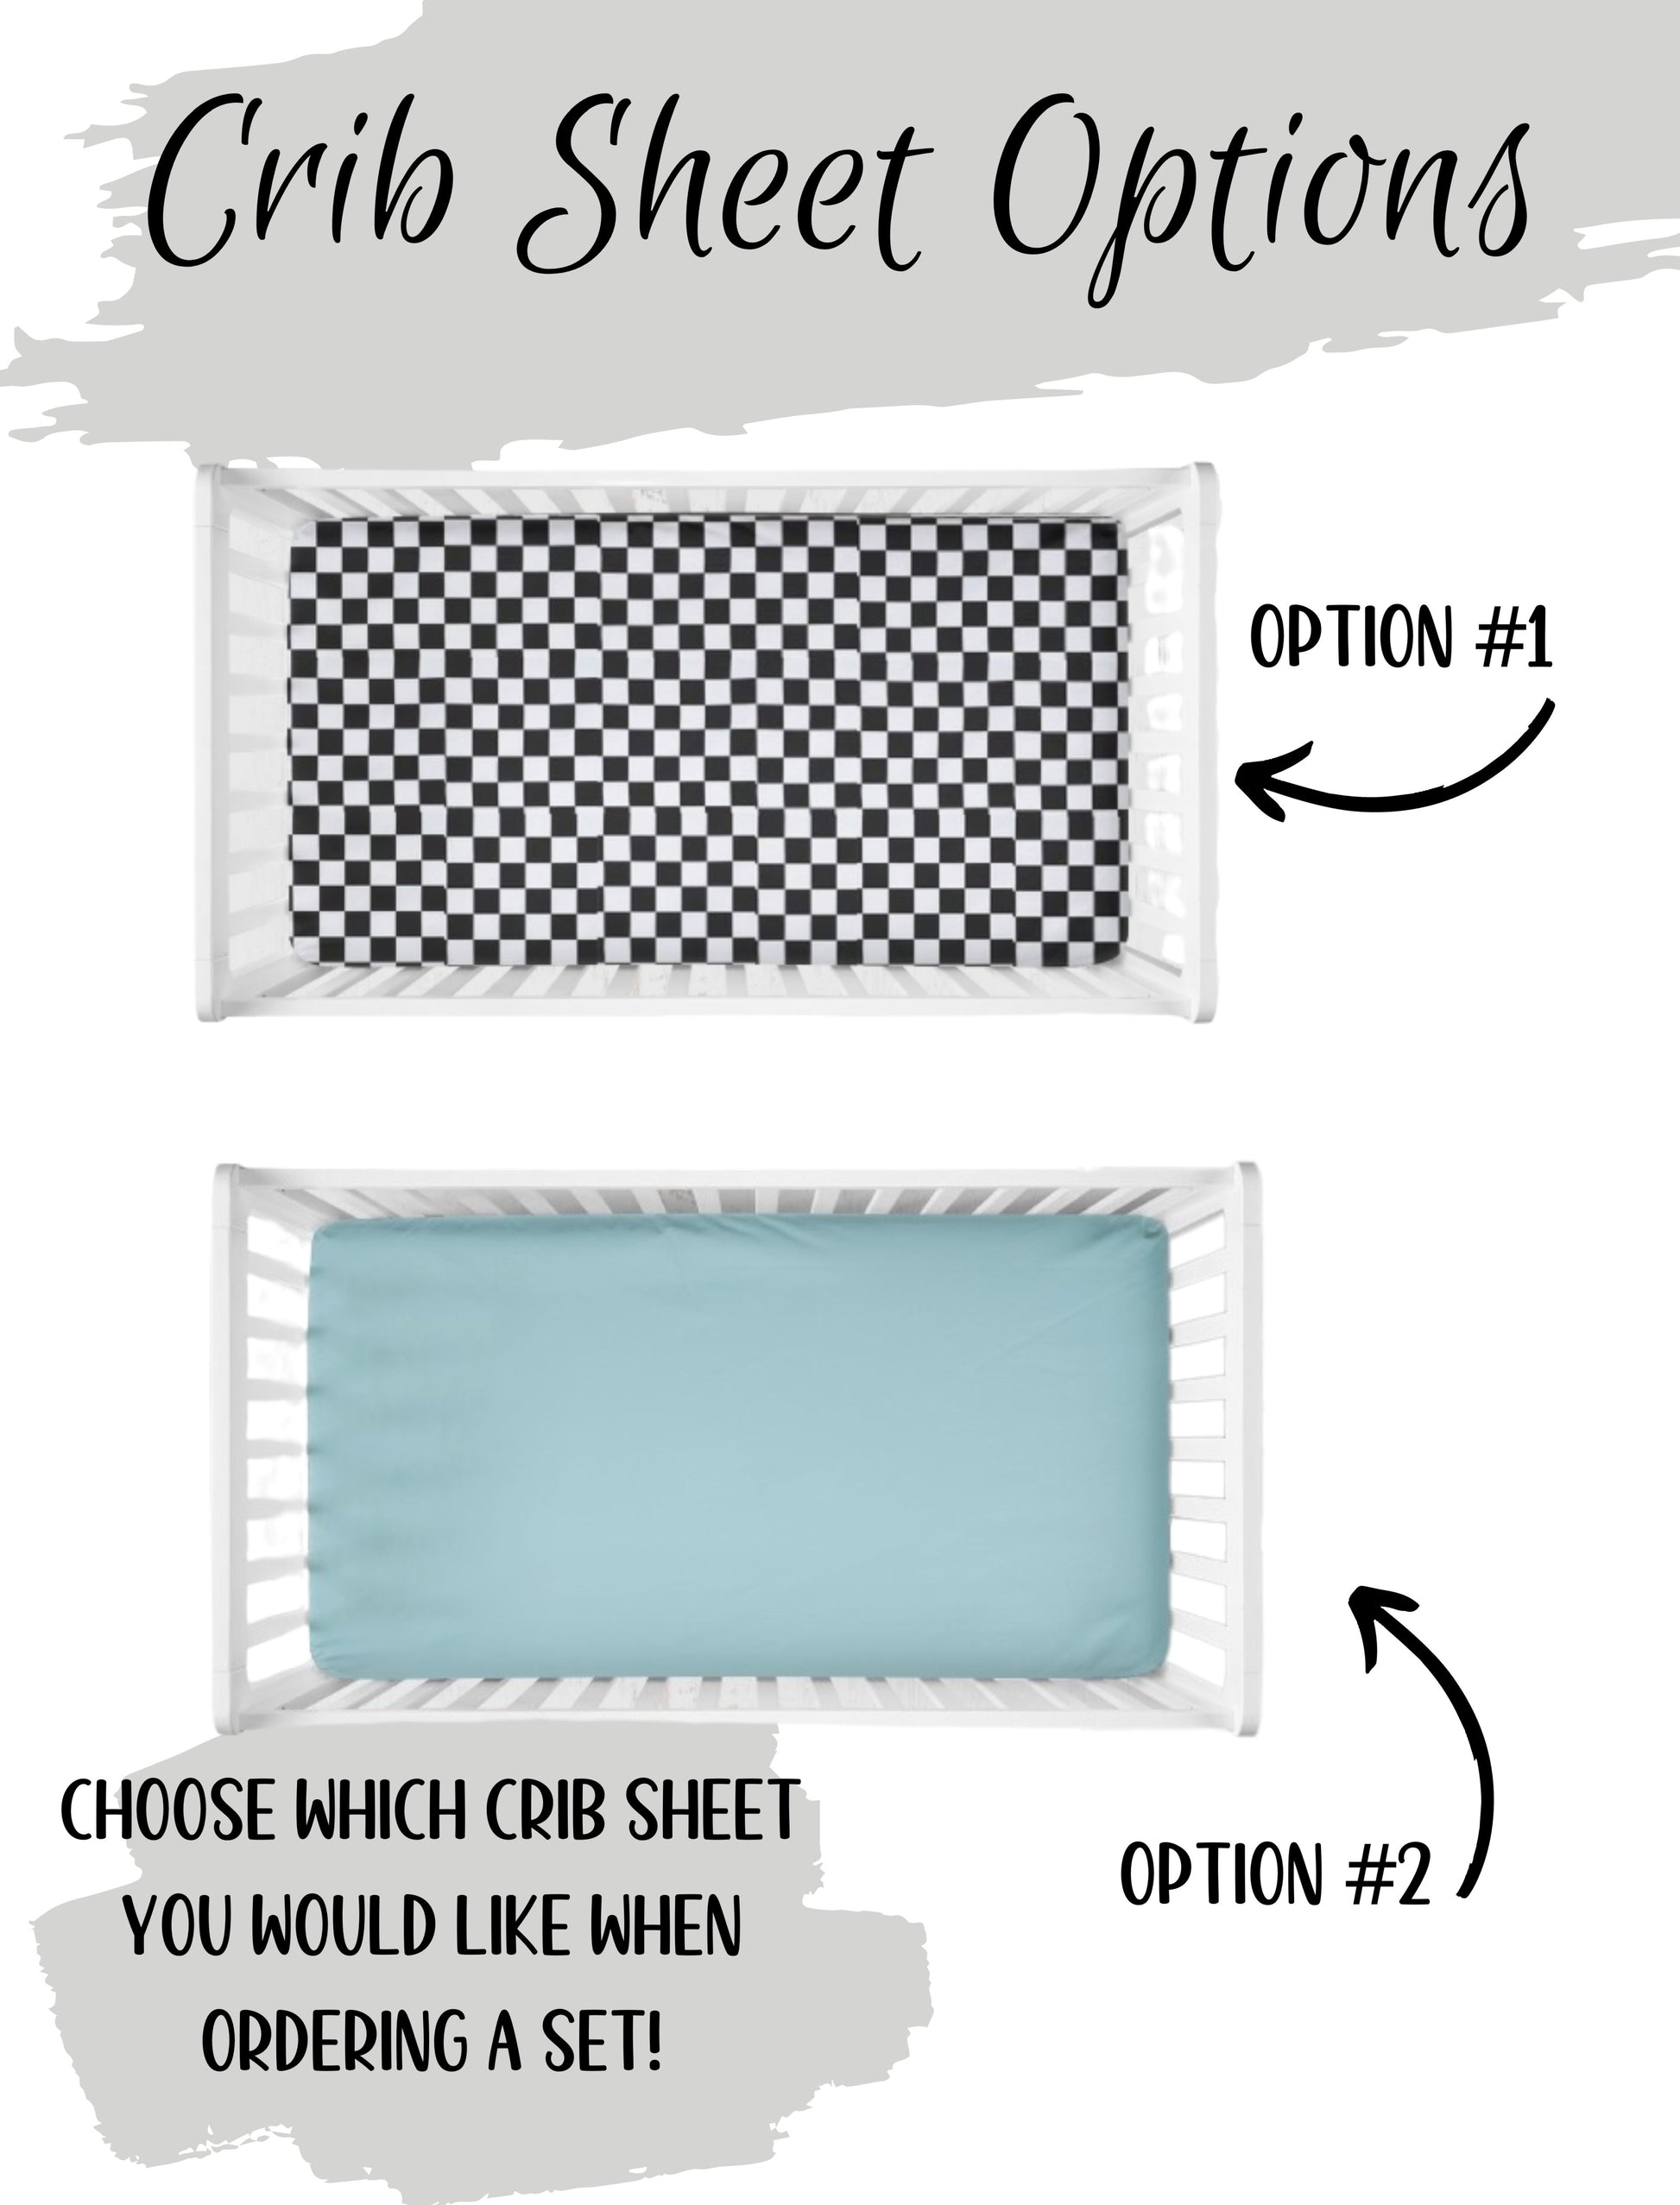 you pick the crib sheet - racing check or aqua